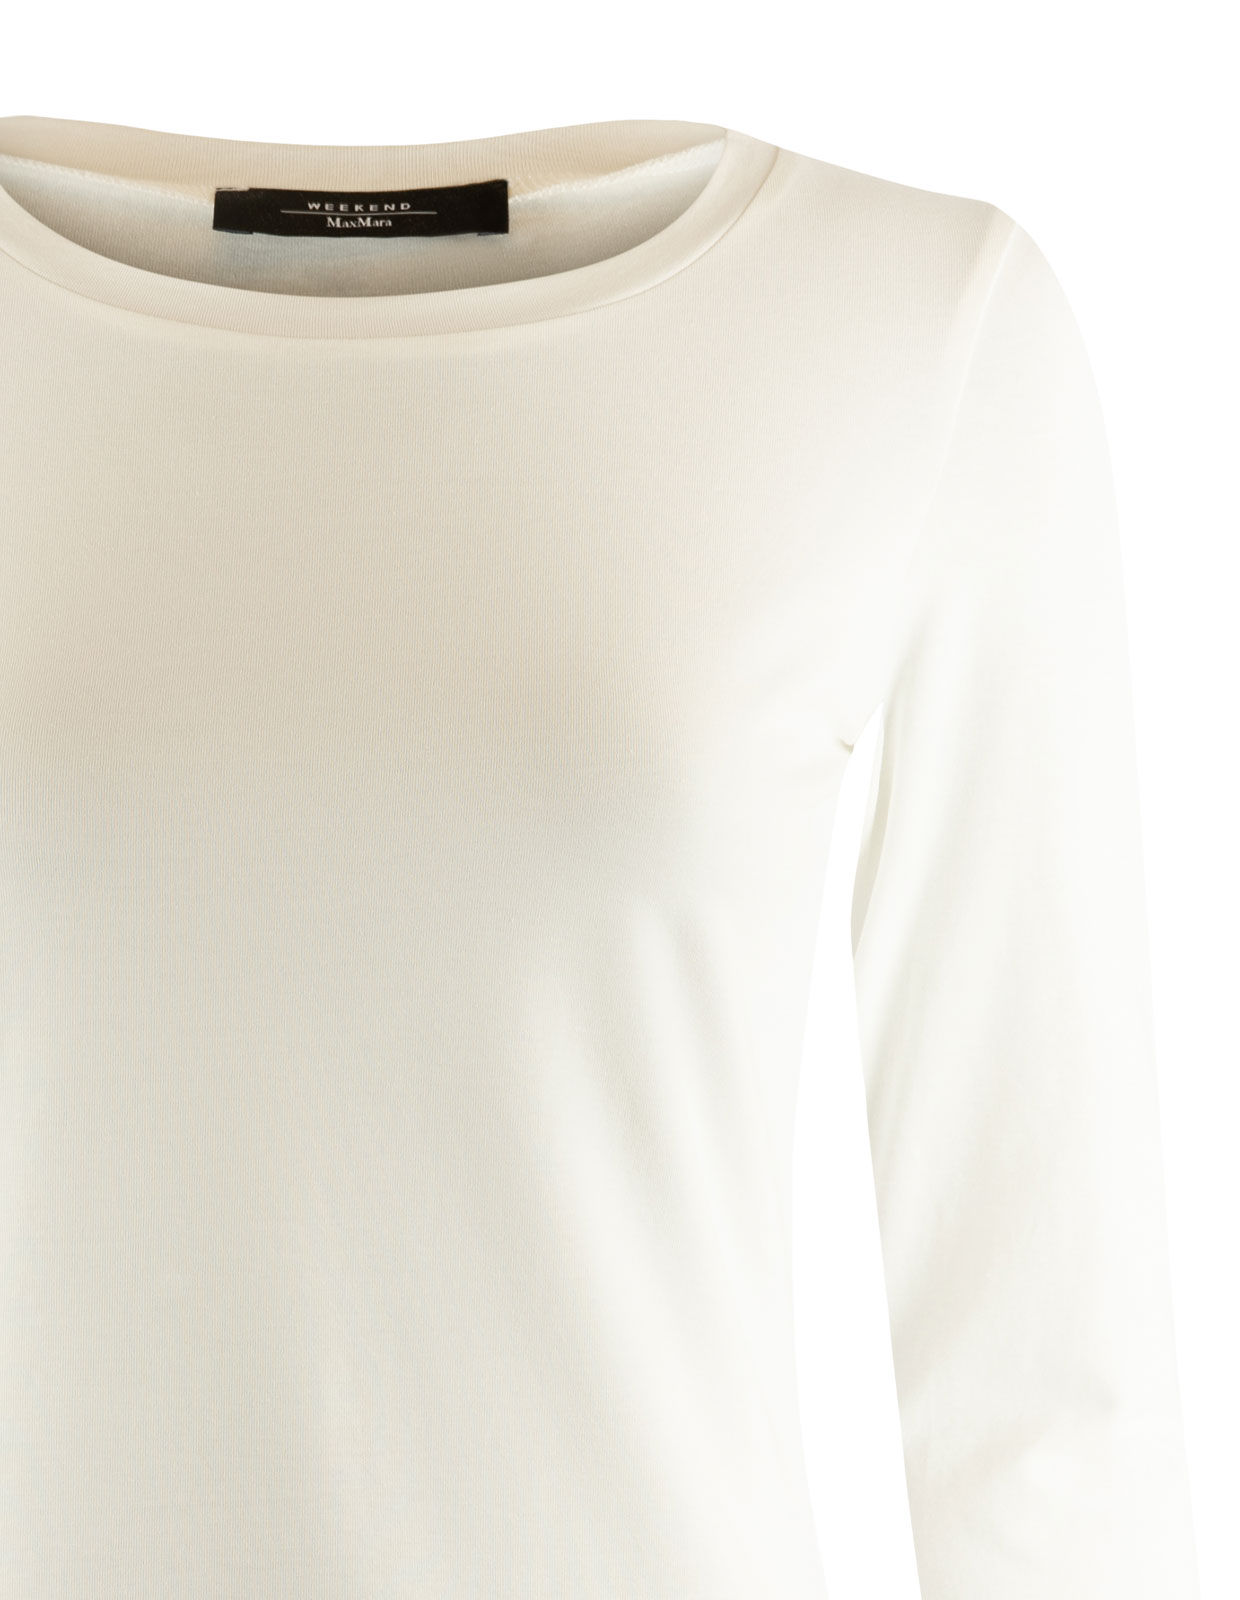 Multia T-Shirt White